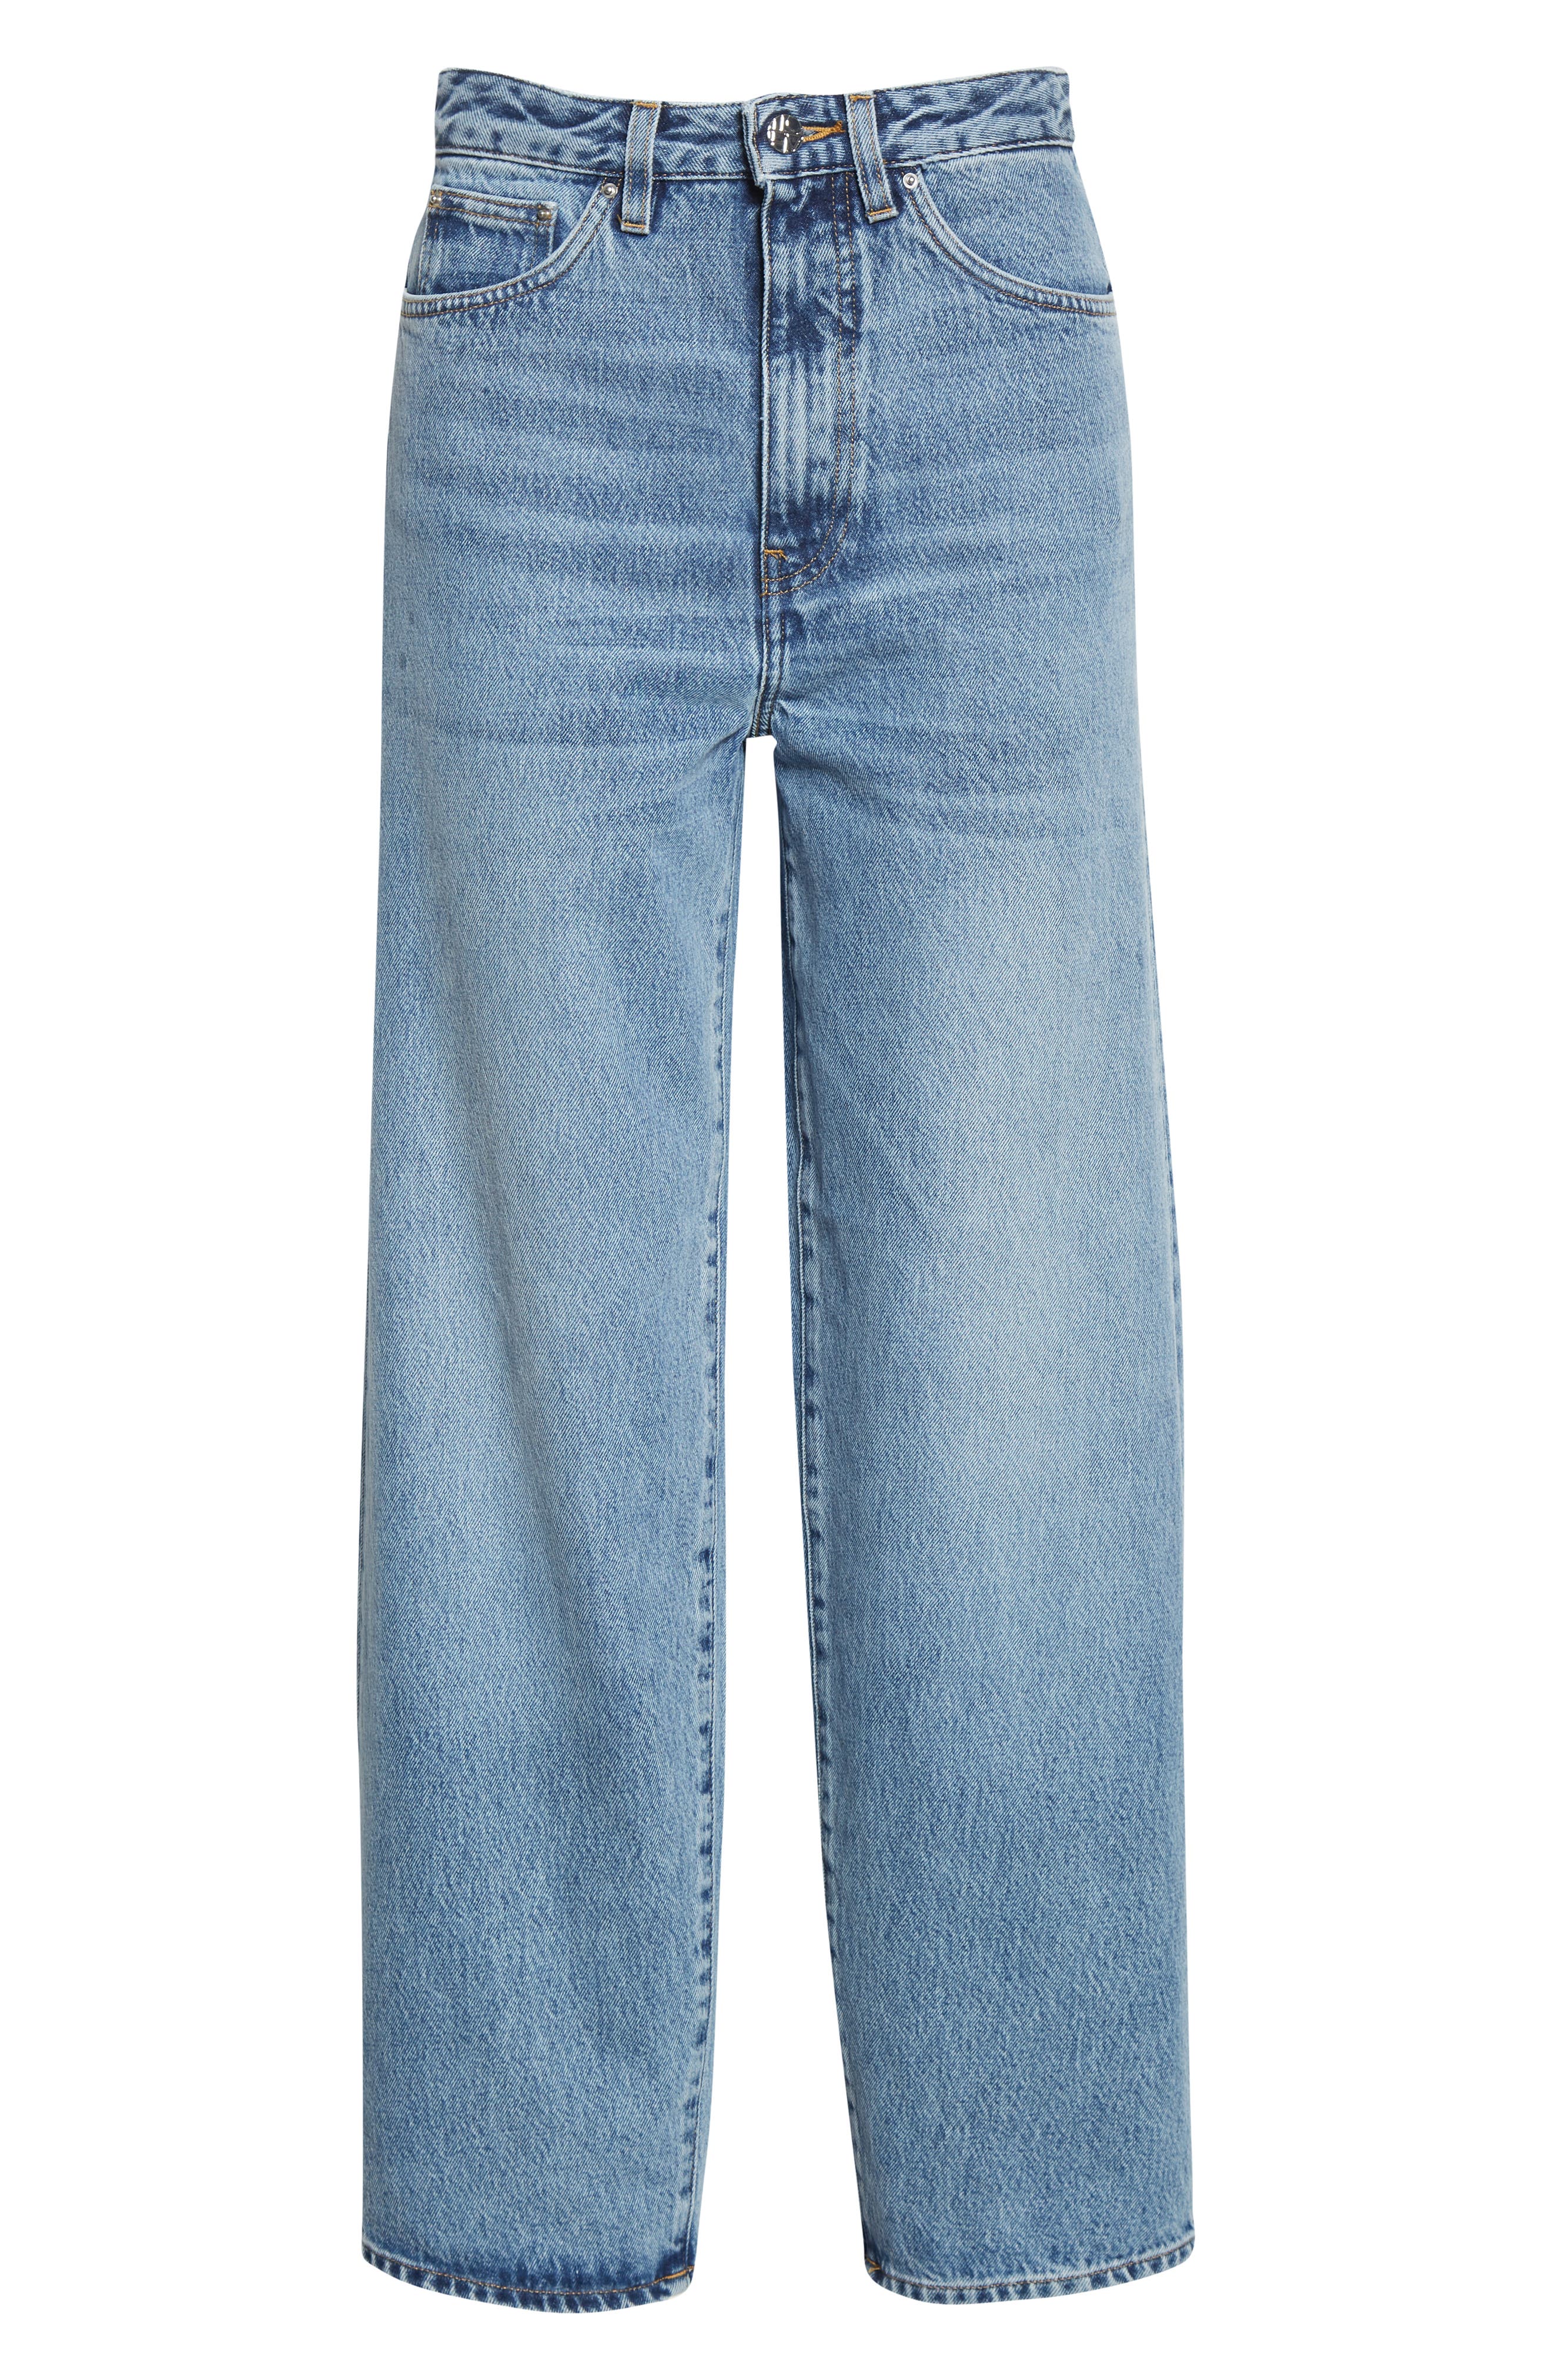 Toteme Rigid Organic Cotton Flare Leg Jeans in Worn Blue